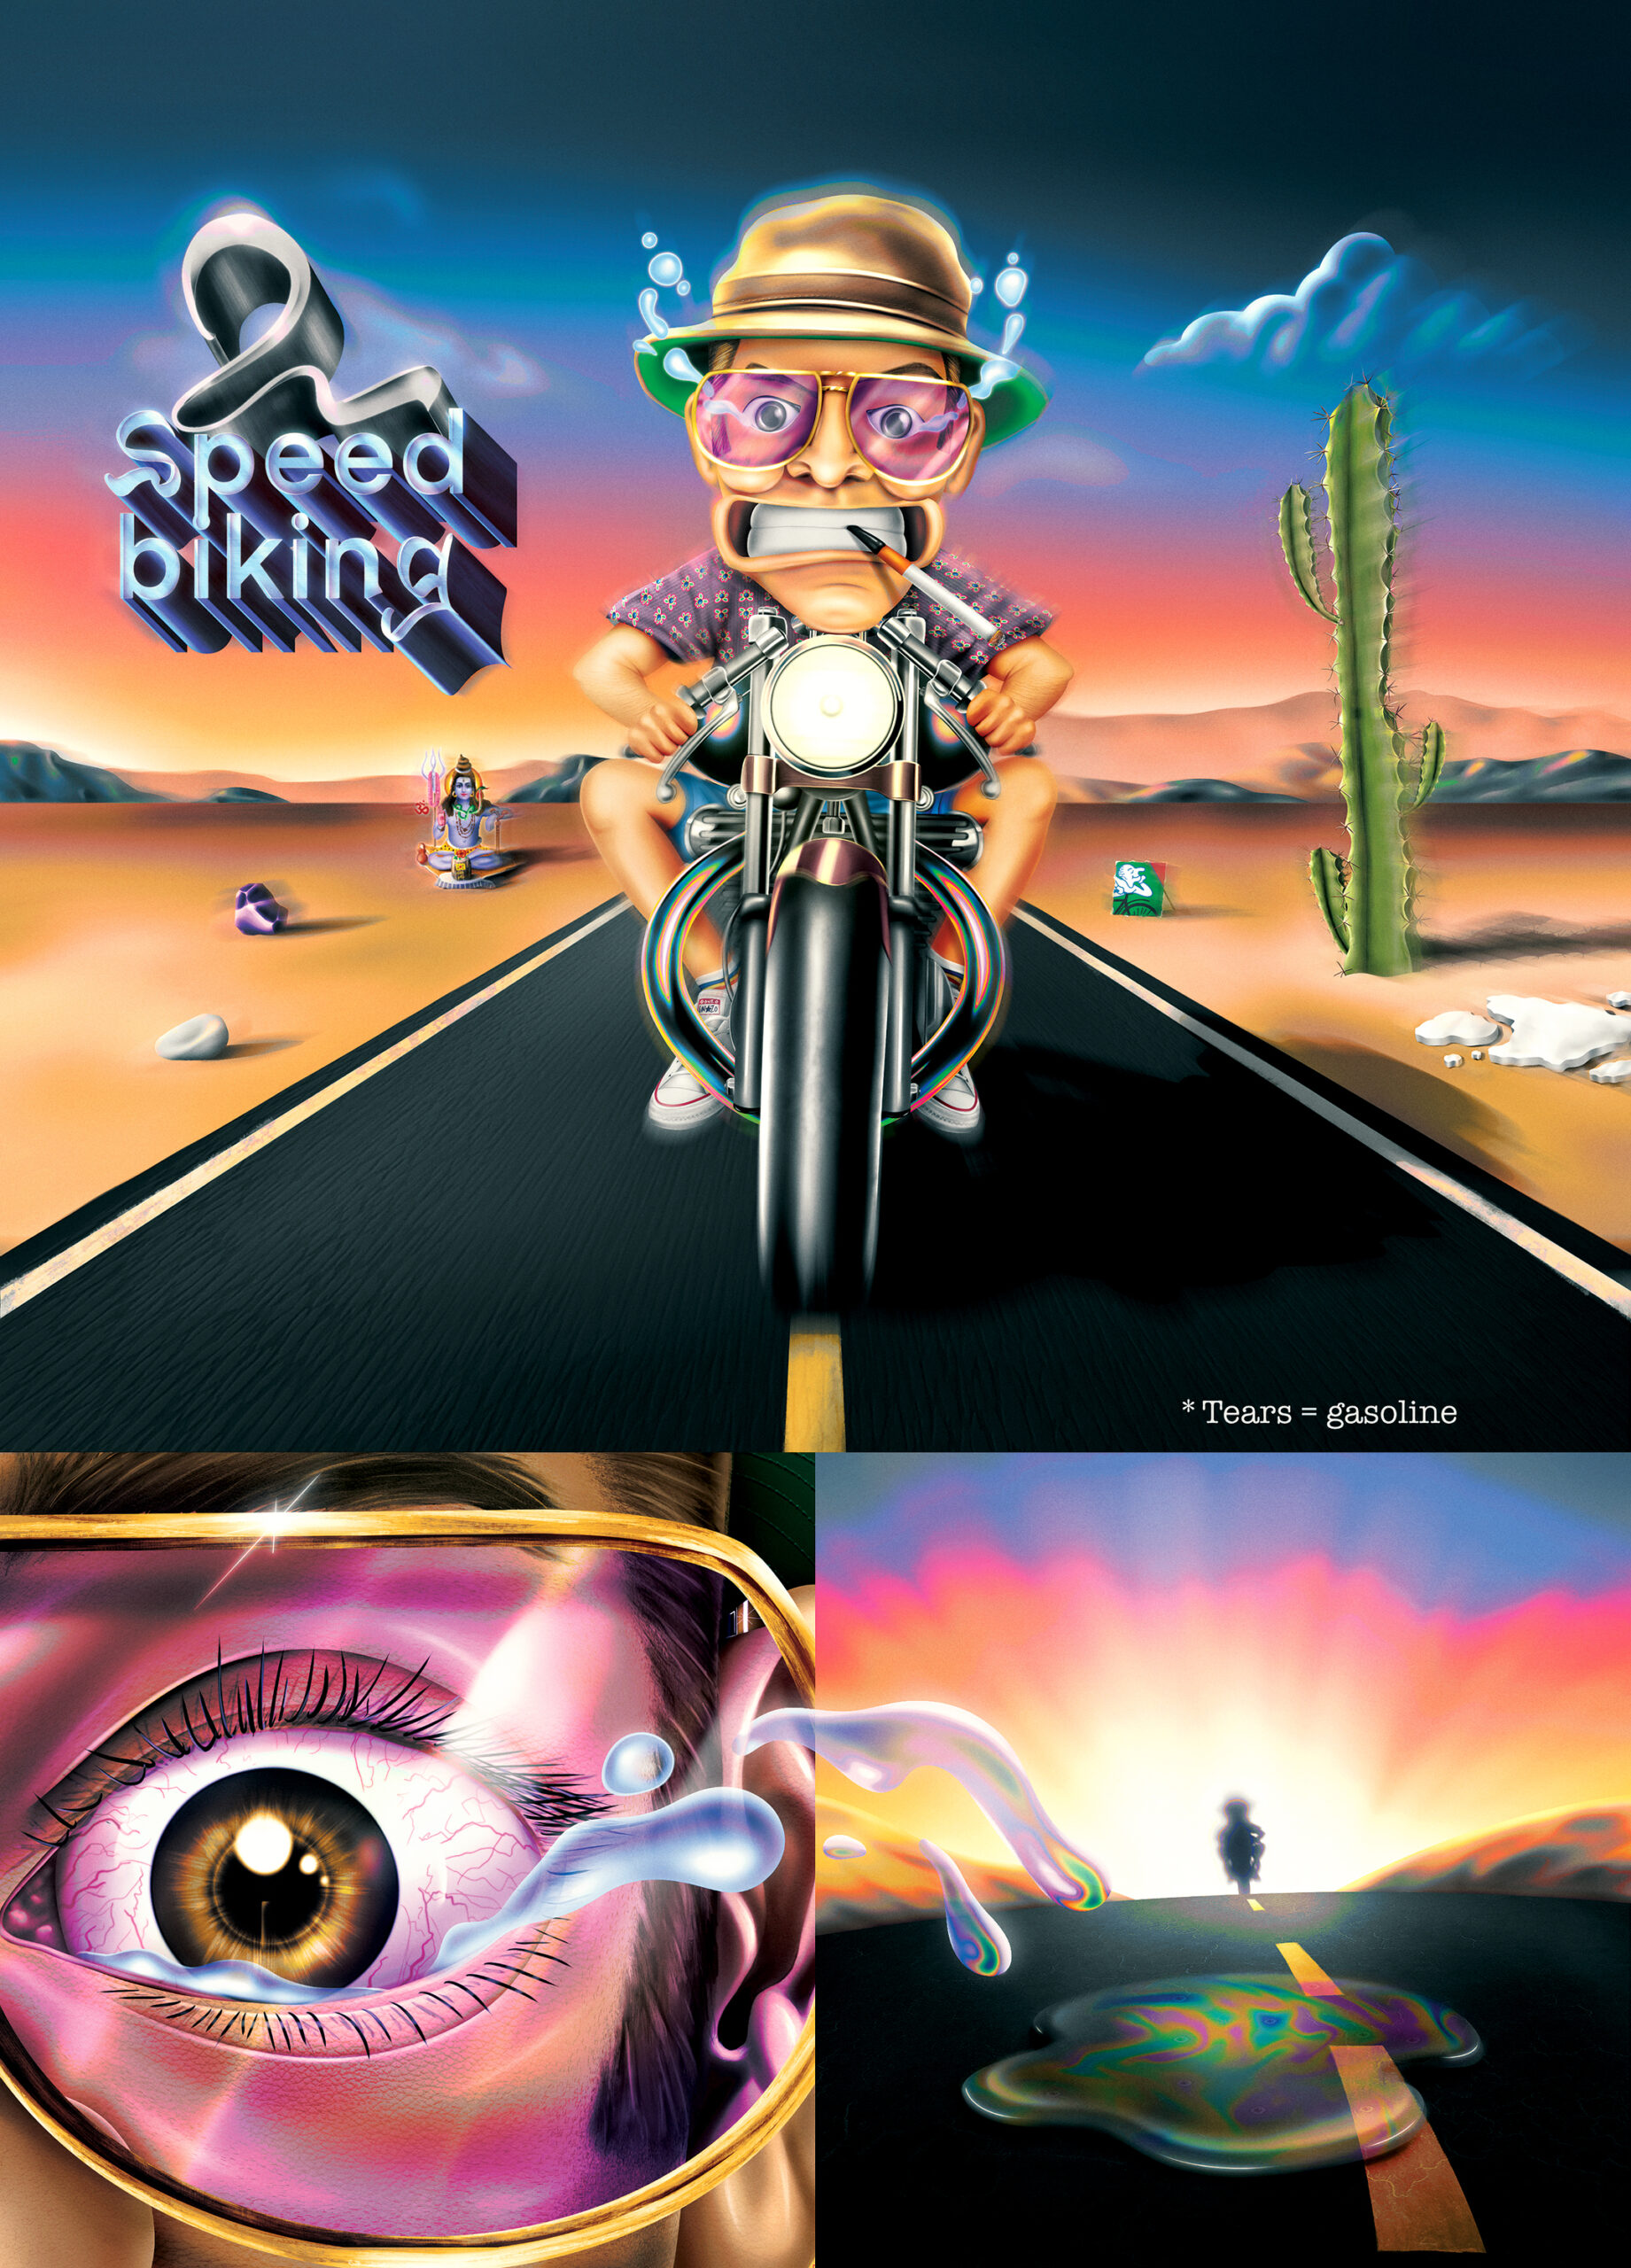 2 Speed Biking book art illustration - Remy Lewandowski